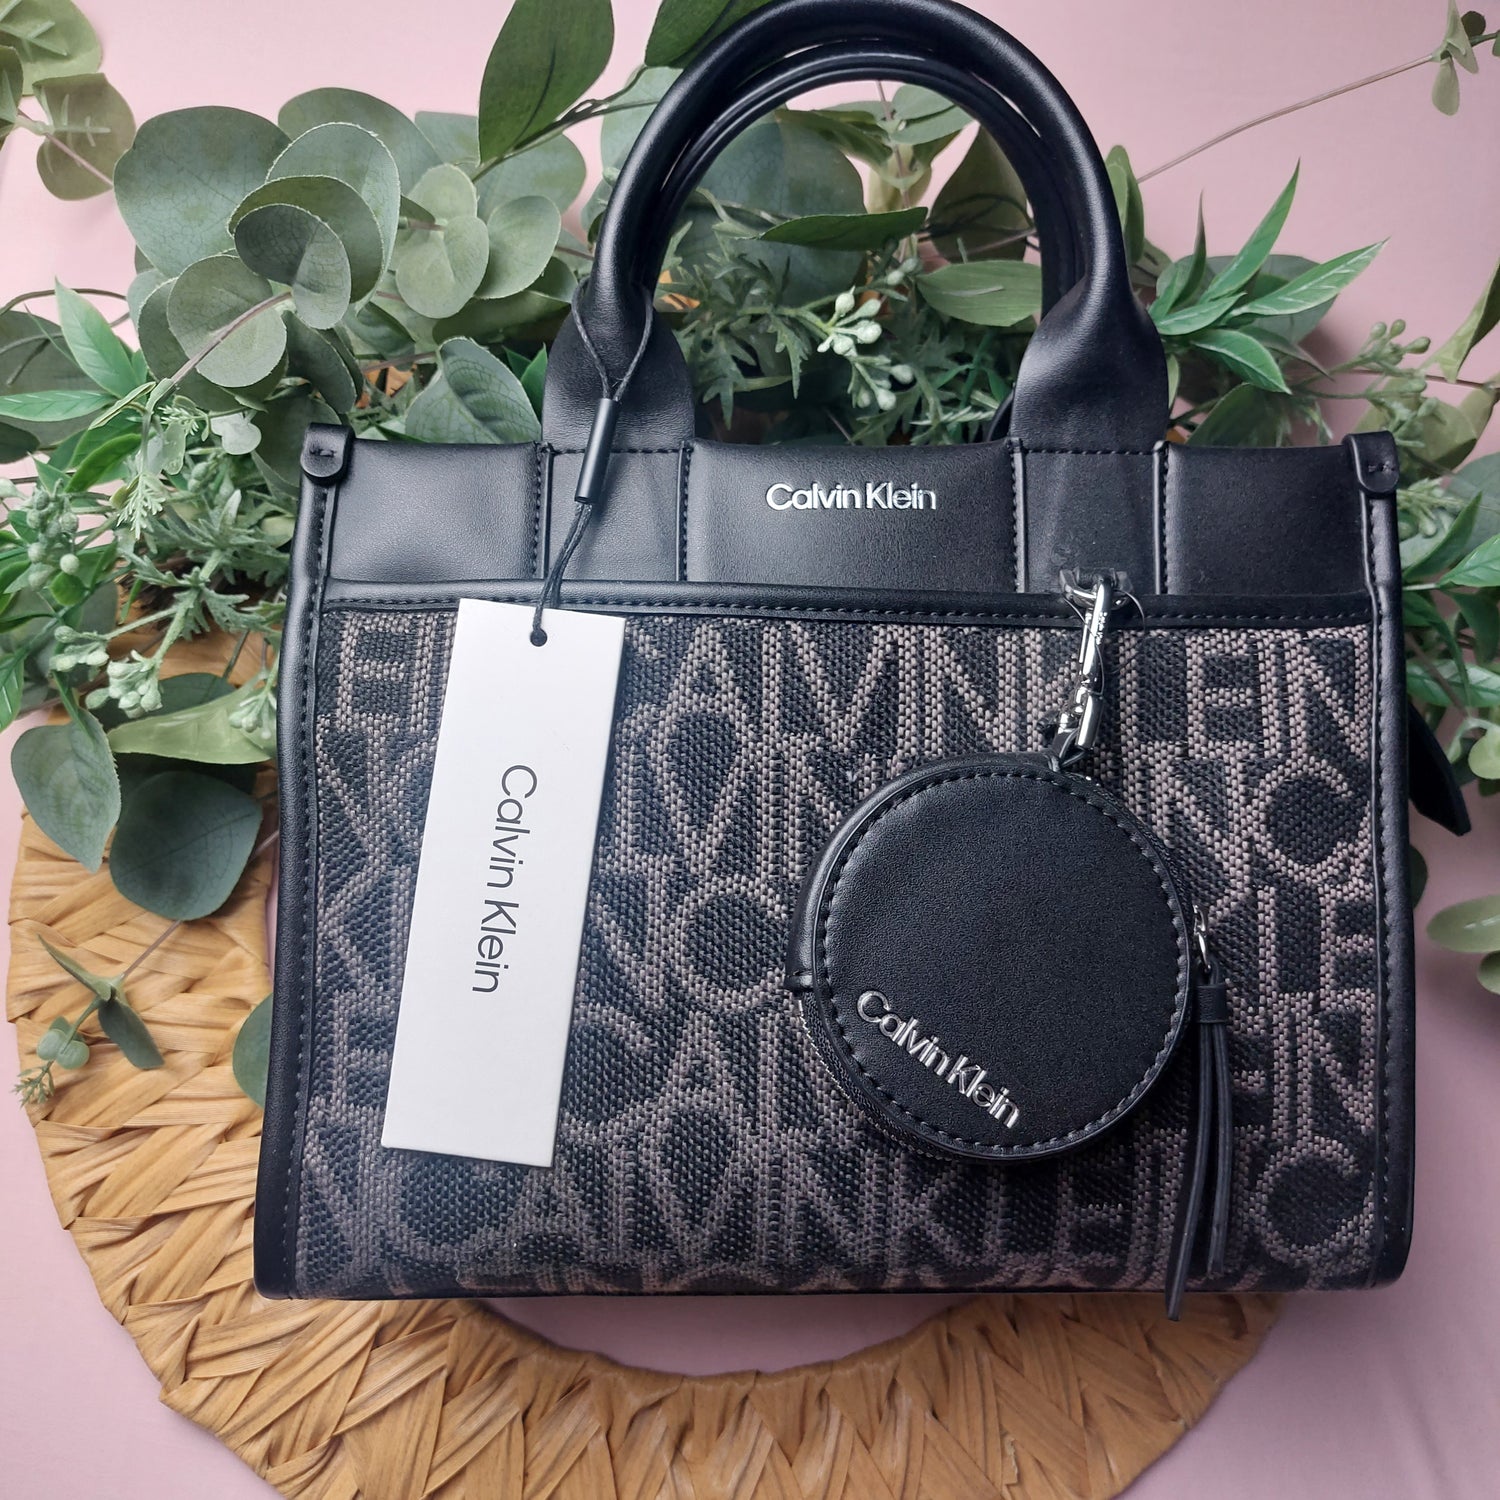 Calvin Klein Authentic Handbags & more